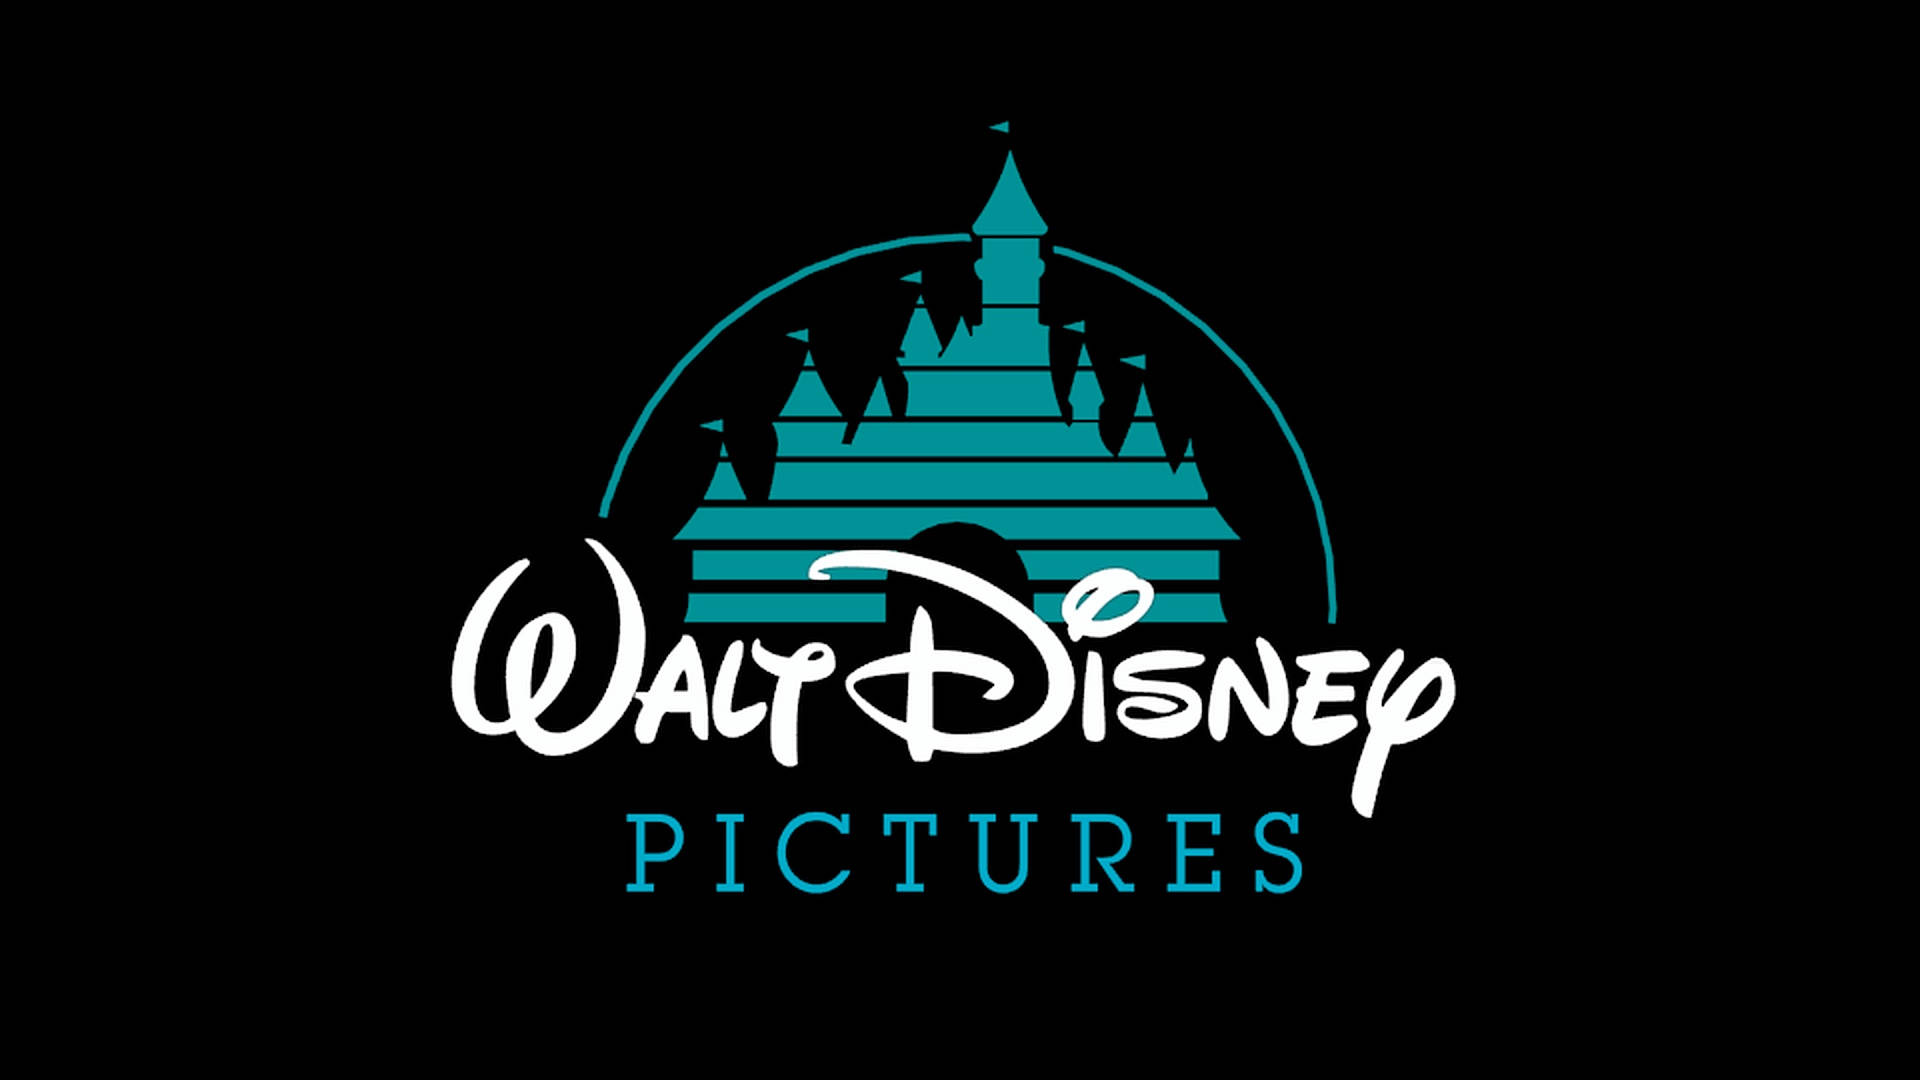 Teal Disney Logo Wallpaper